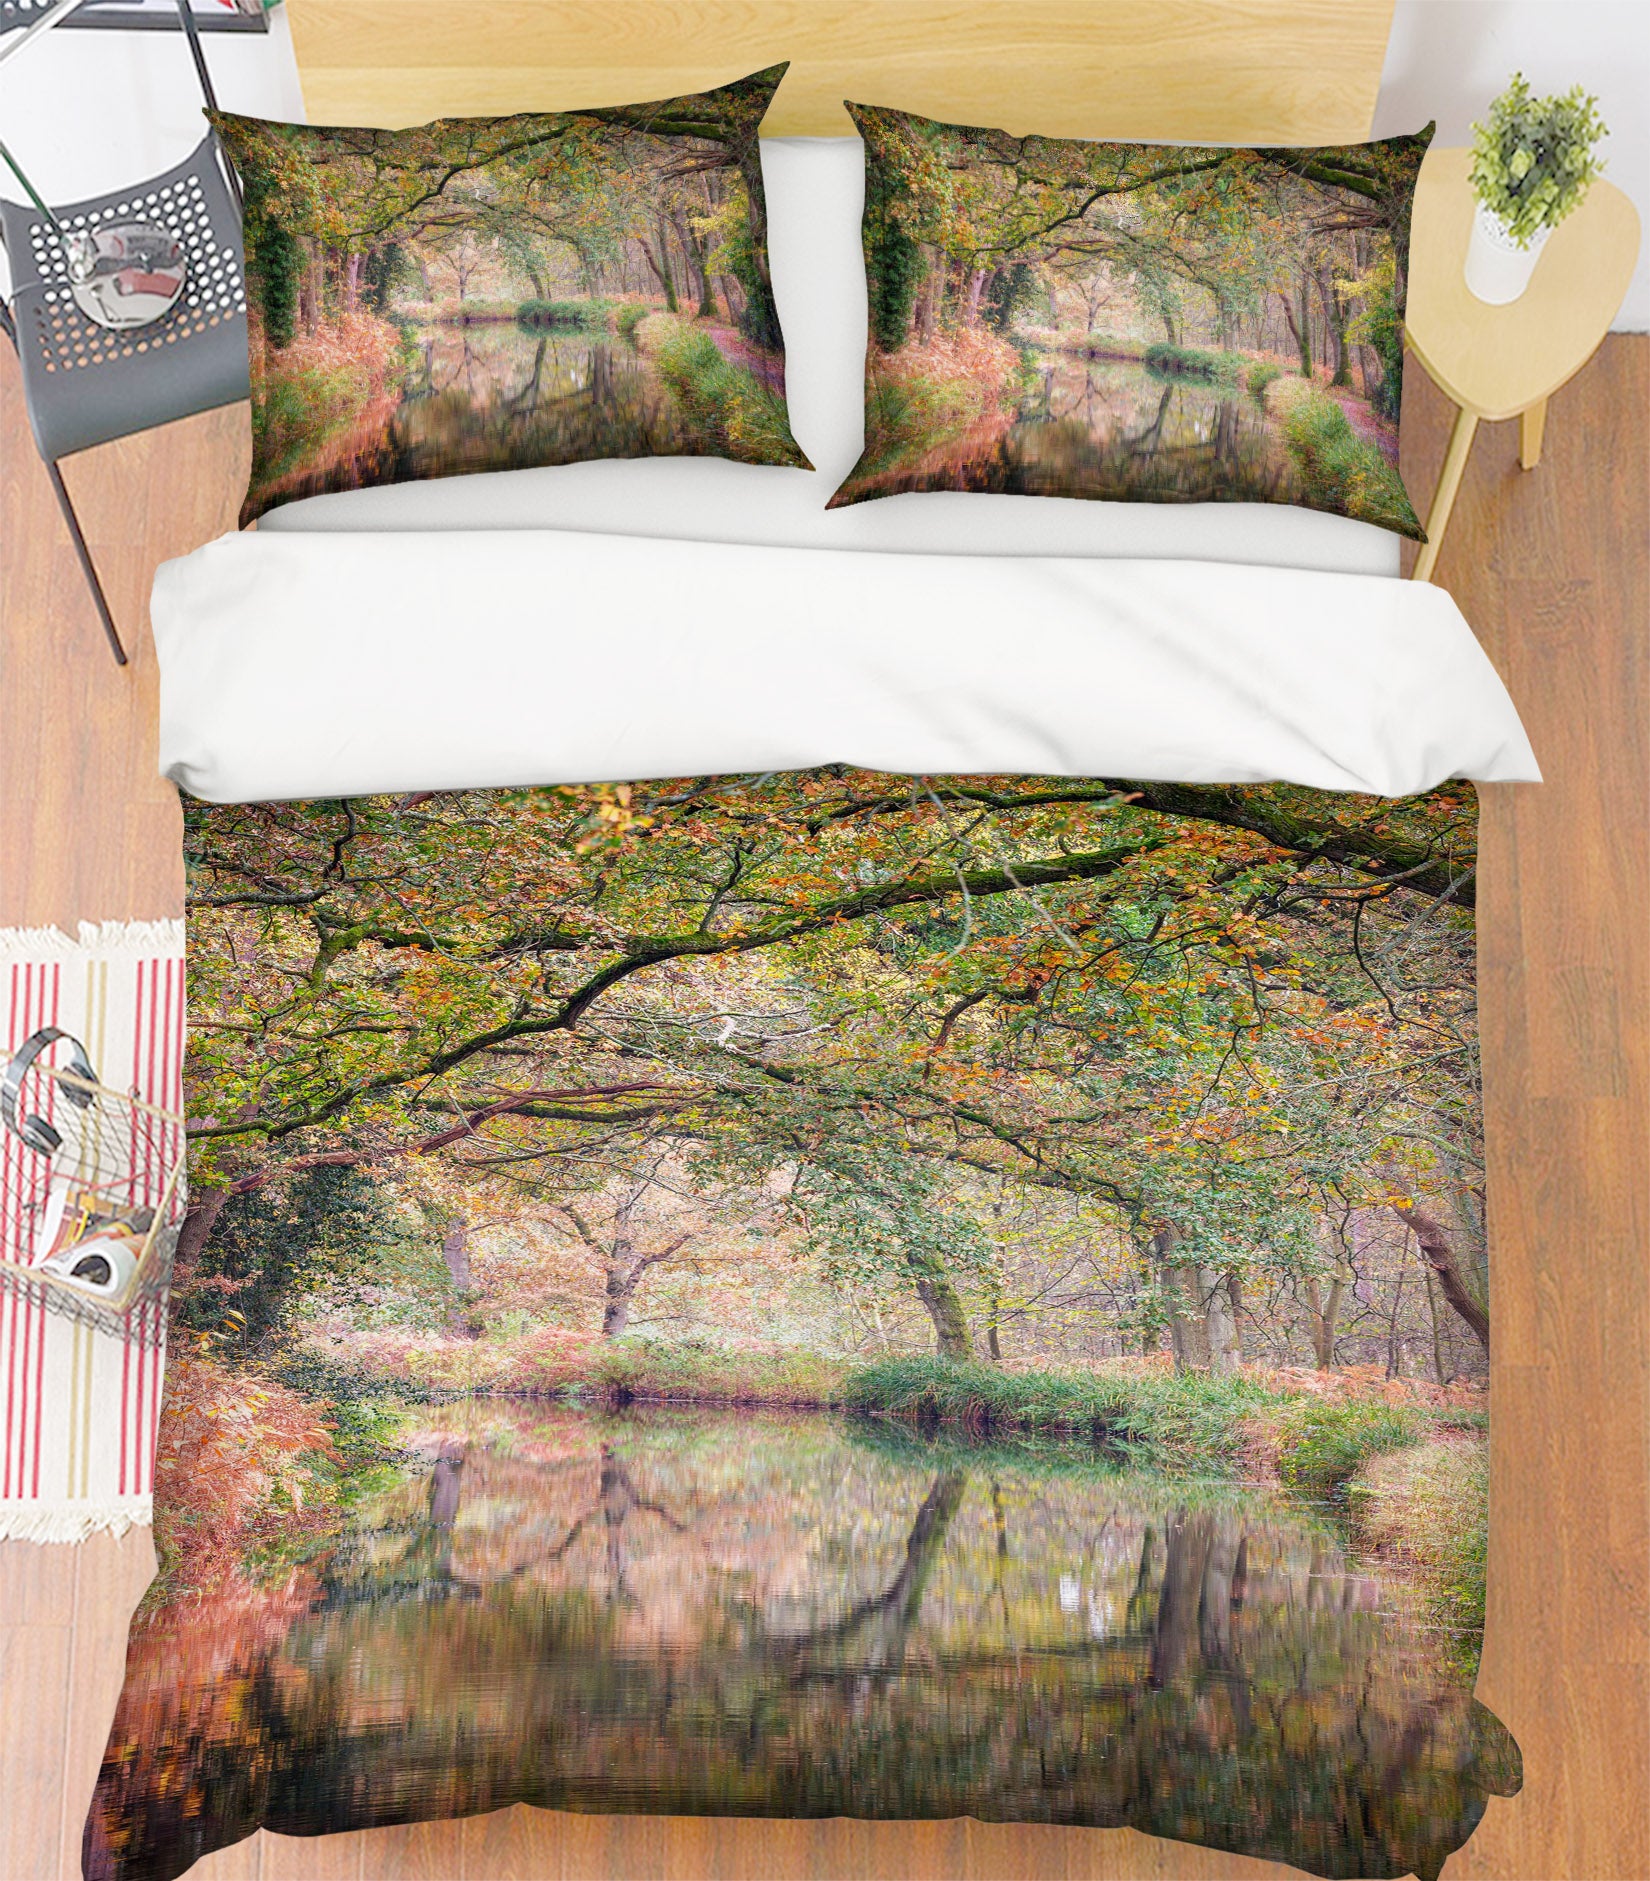 3D Forest River 7230 Assaf Frank Bedding Bed Pillowcases Quilt Cover Duvet Cover